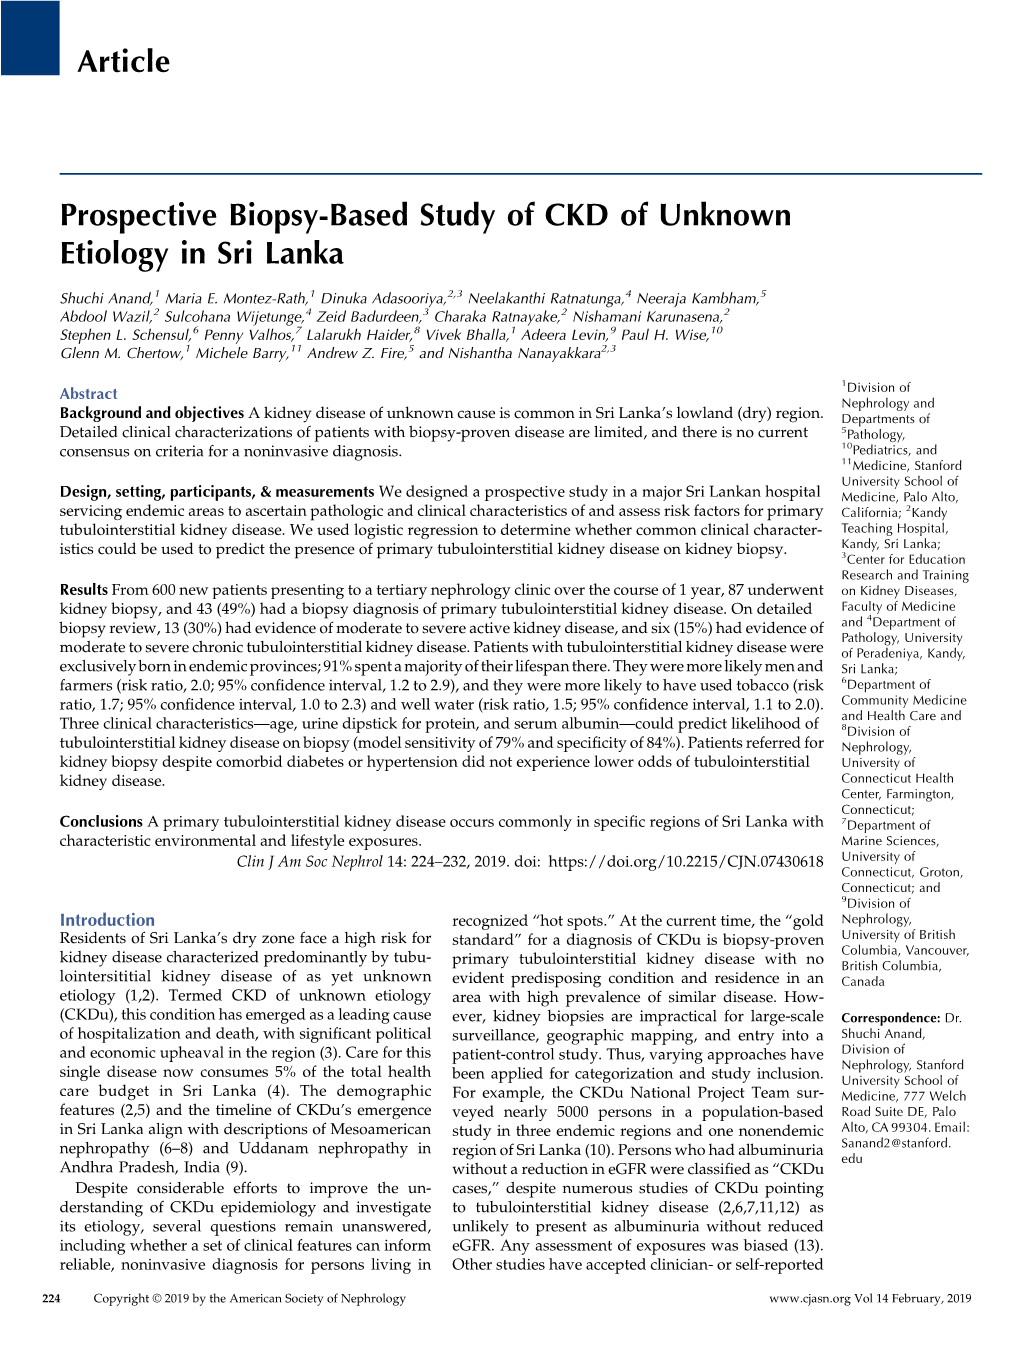 Prospective Biopsy-Based Study of CKD of Unknown Etiology in Sri Lanka